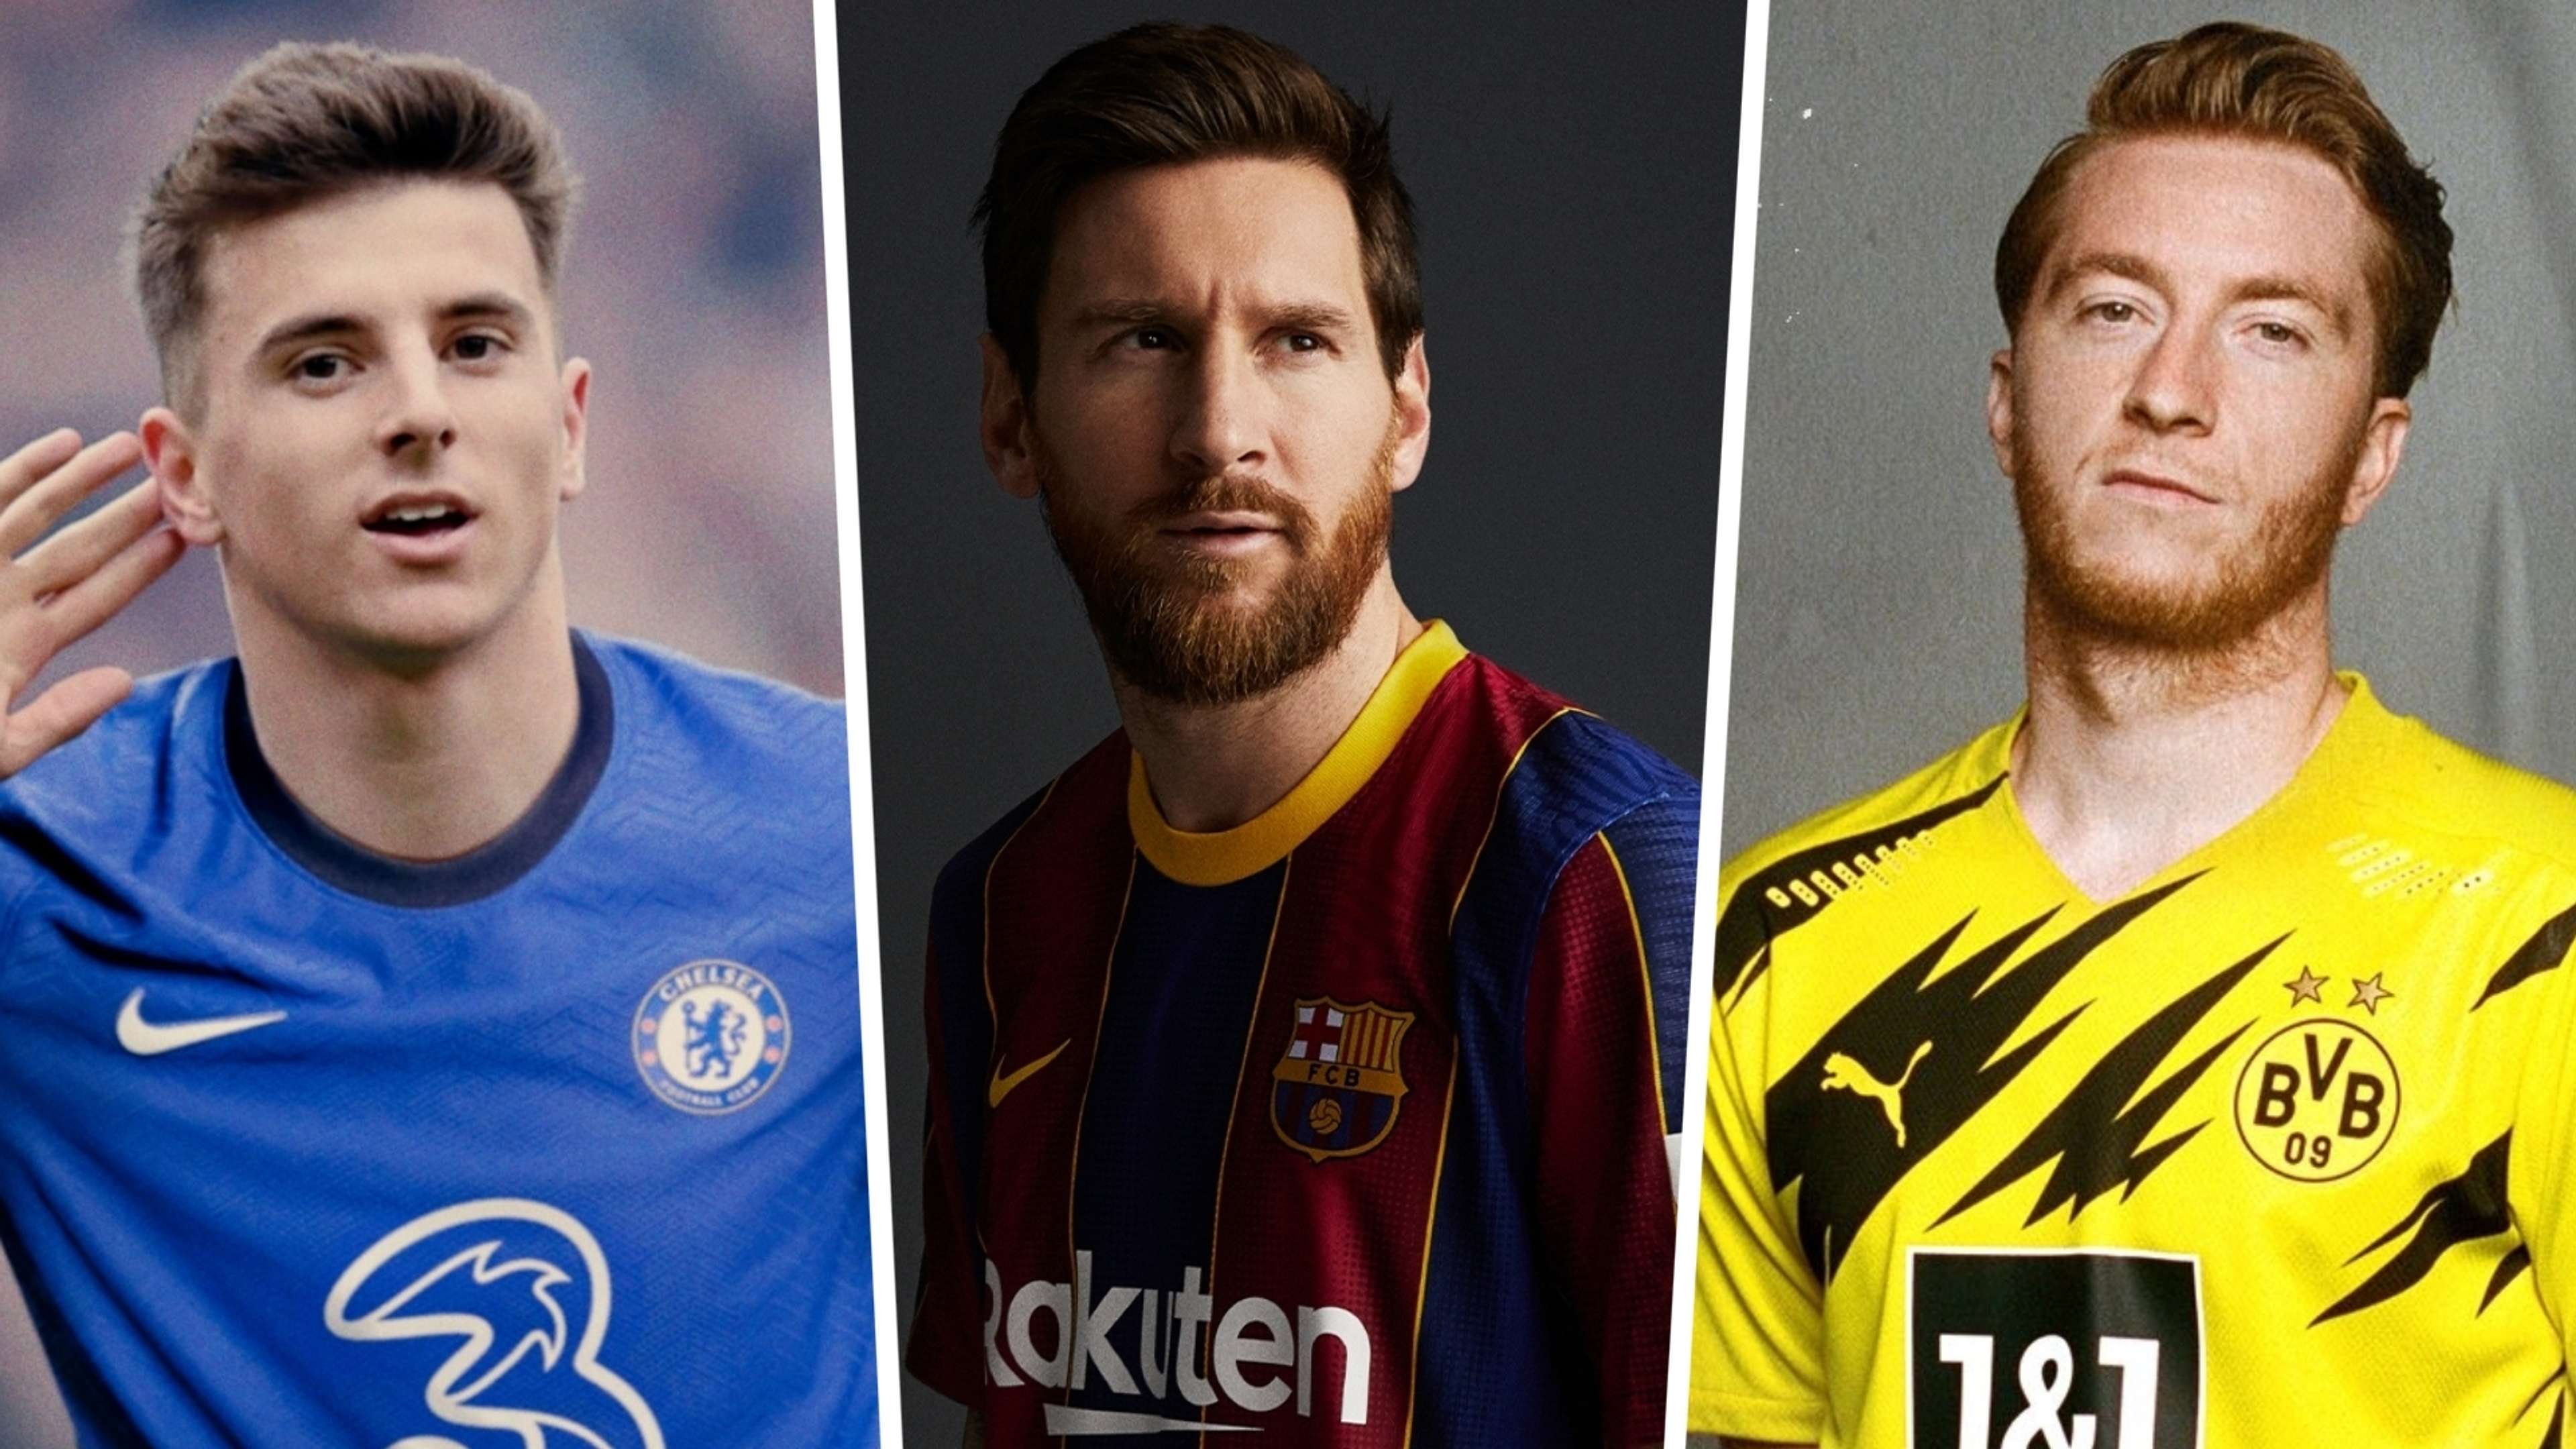 Mason Mount Lionel Messi Marco Reus Chelsea Barcelona Borussia Dortmund 2020-21 kits